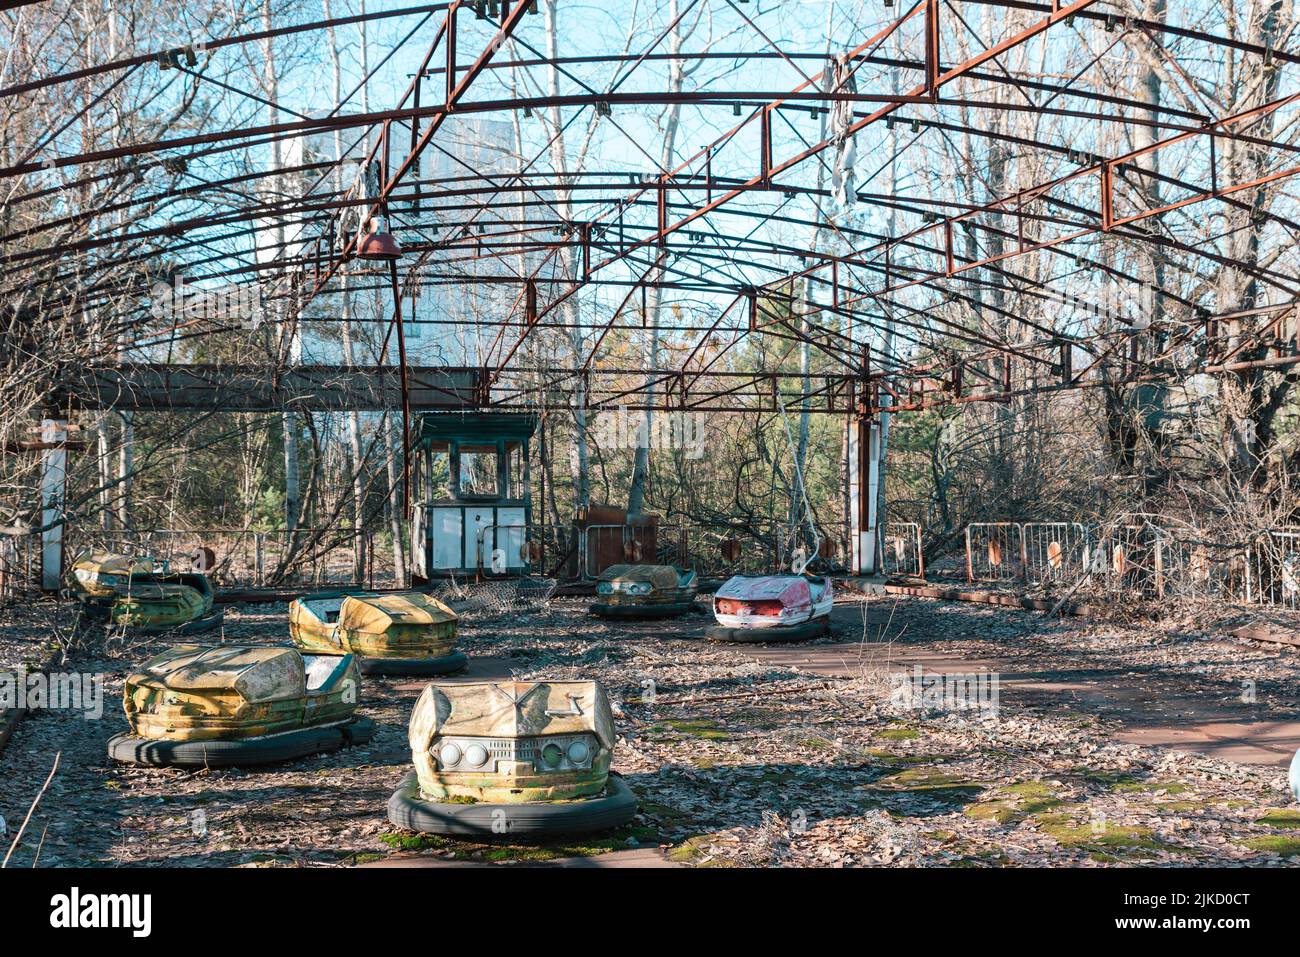 Photos from around the chernobyl exclusion zone, ukraine. Stock Photo